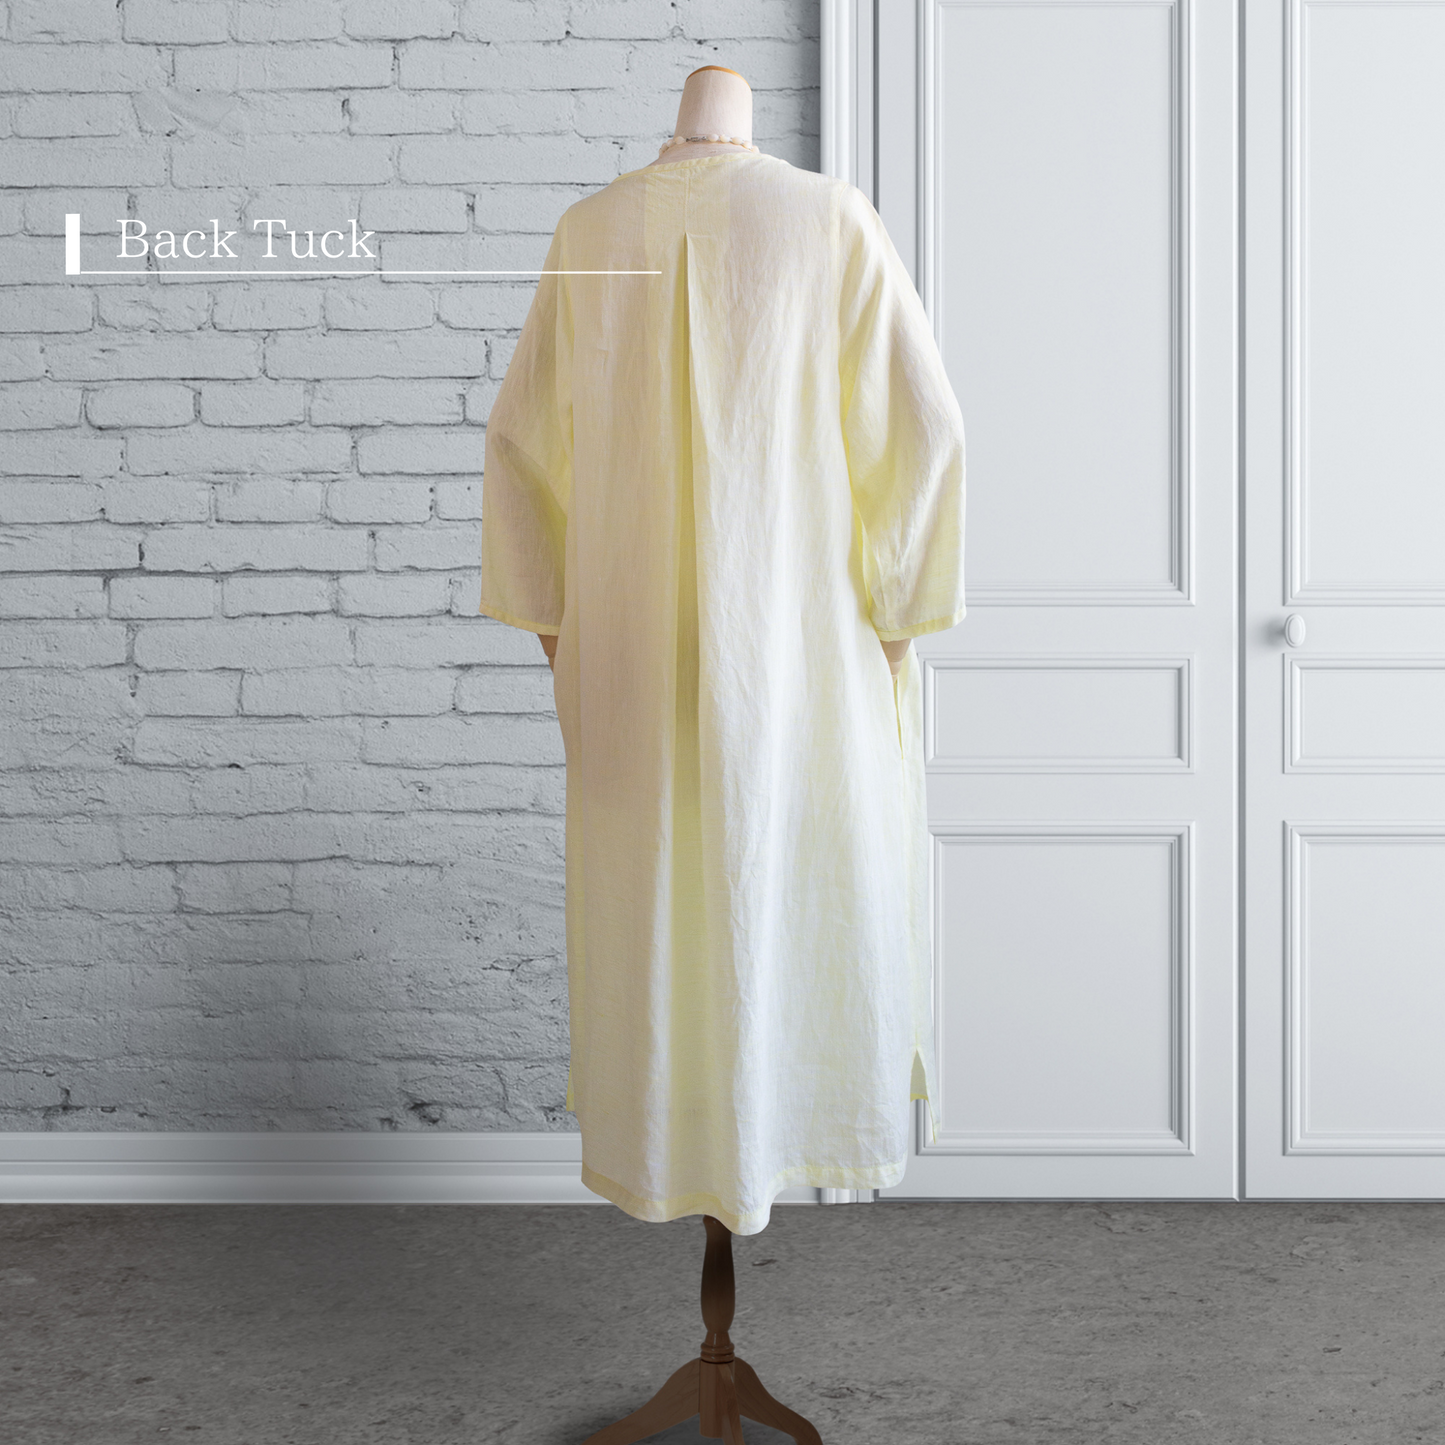 Linen Lemon Yellow Back Tuck Dress 3/4 Sleeve AP09 